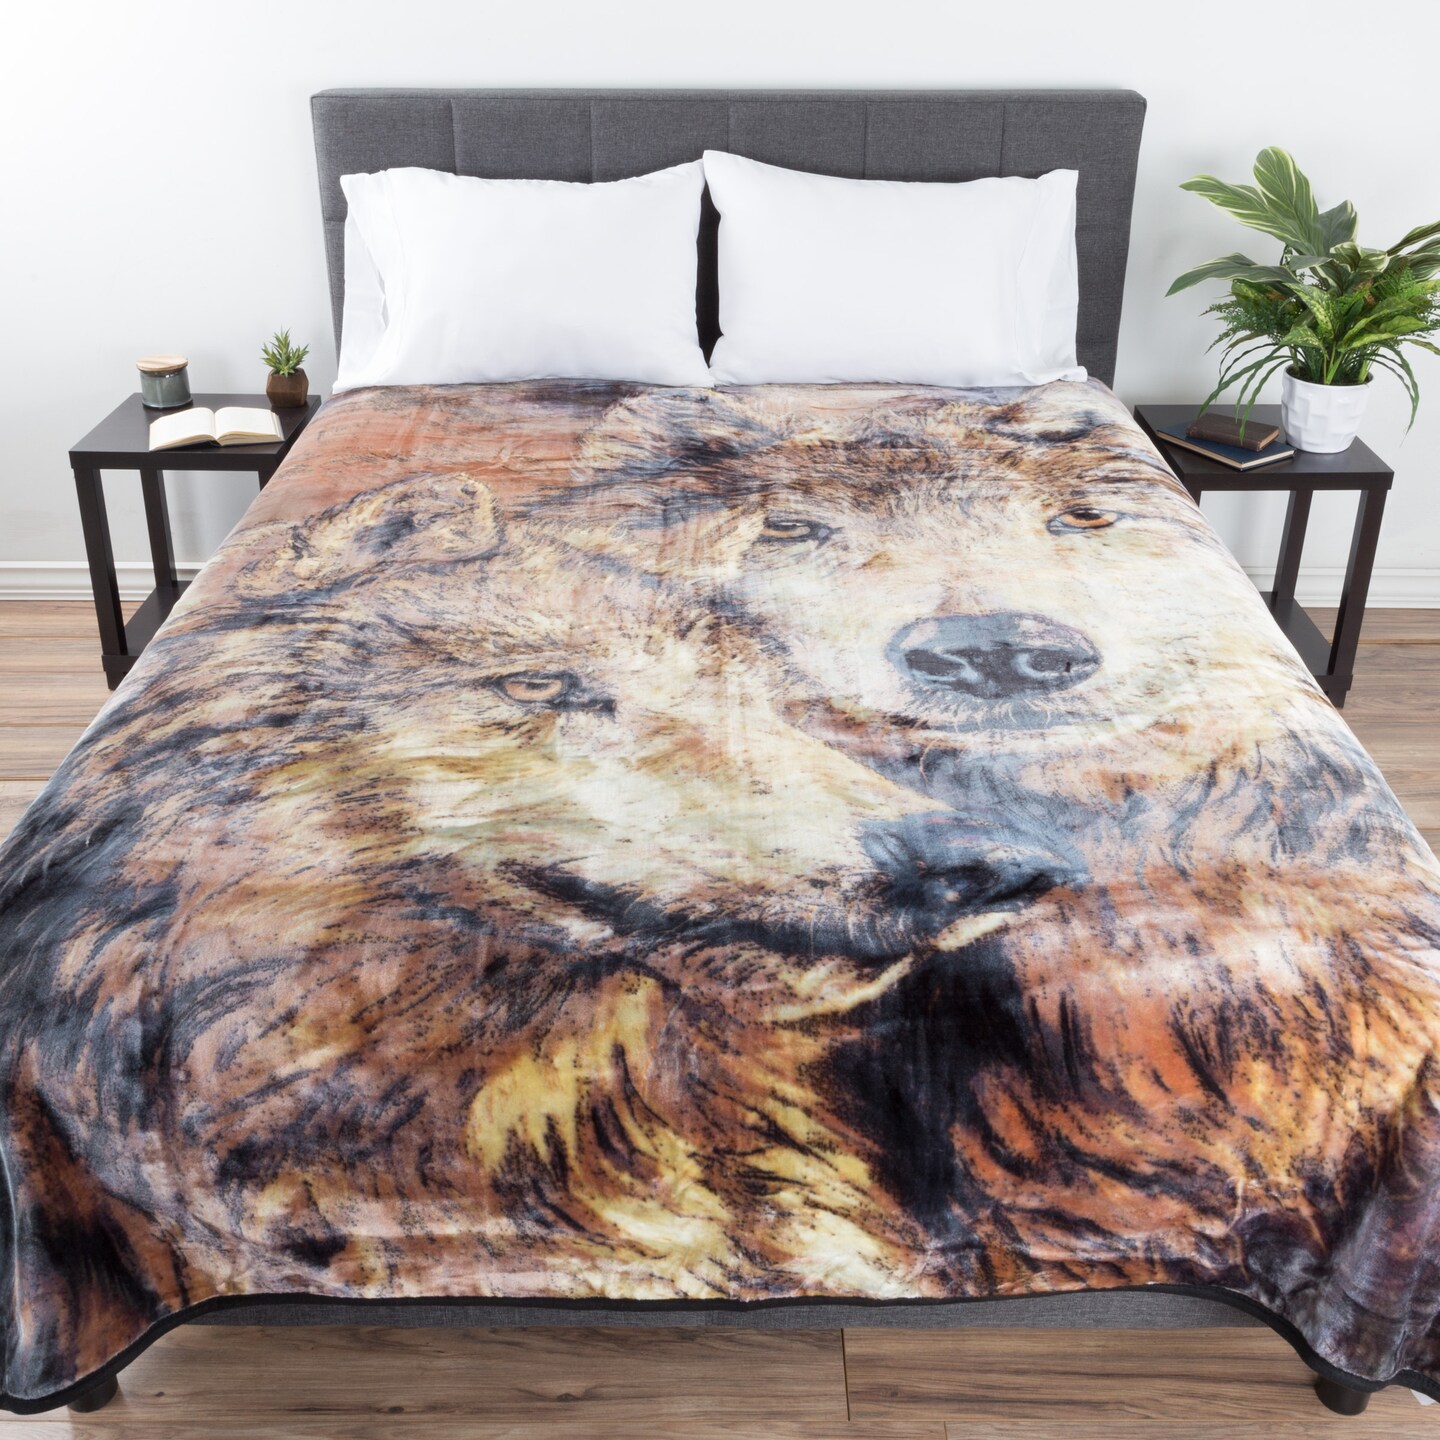 Lavish Home Full Queen Size Luxury Mink Fuzzy Blanket Wolf Pair Super Soft 74 x 91 Inch 7.5 lbs